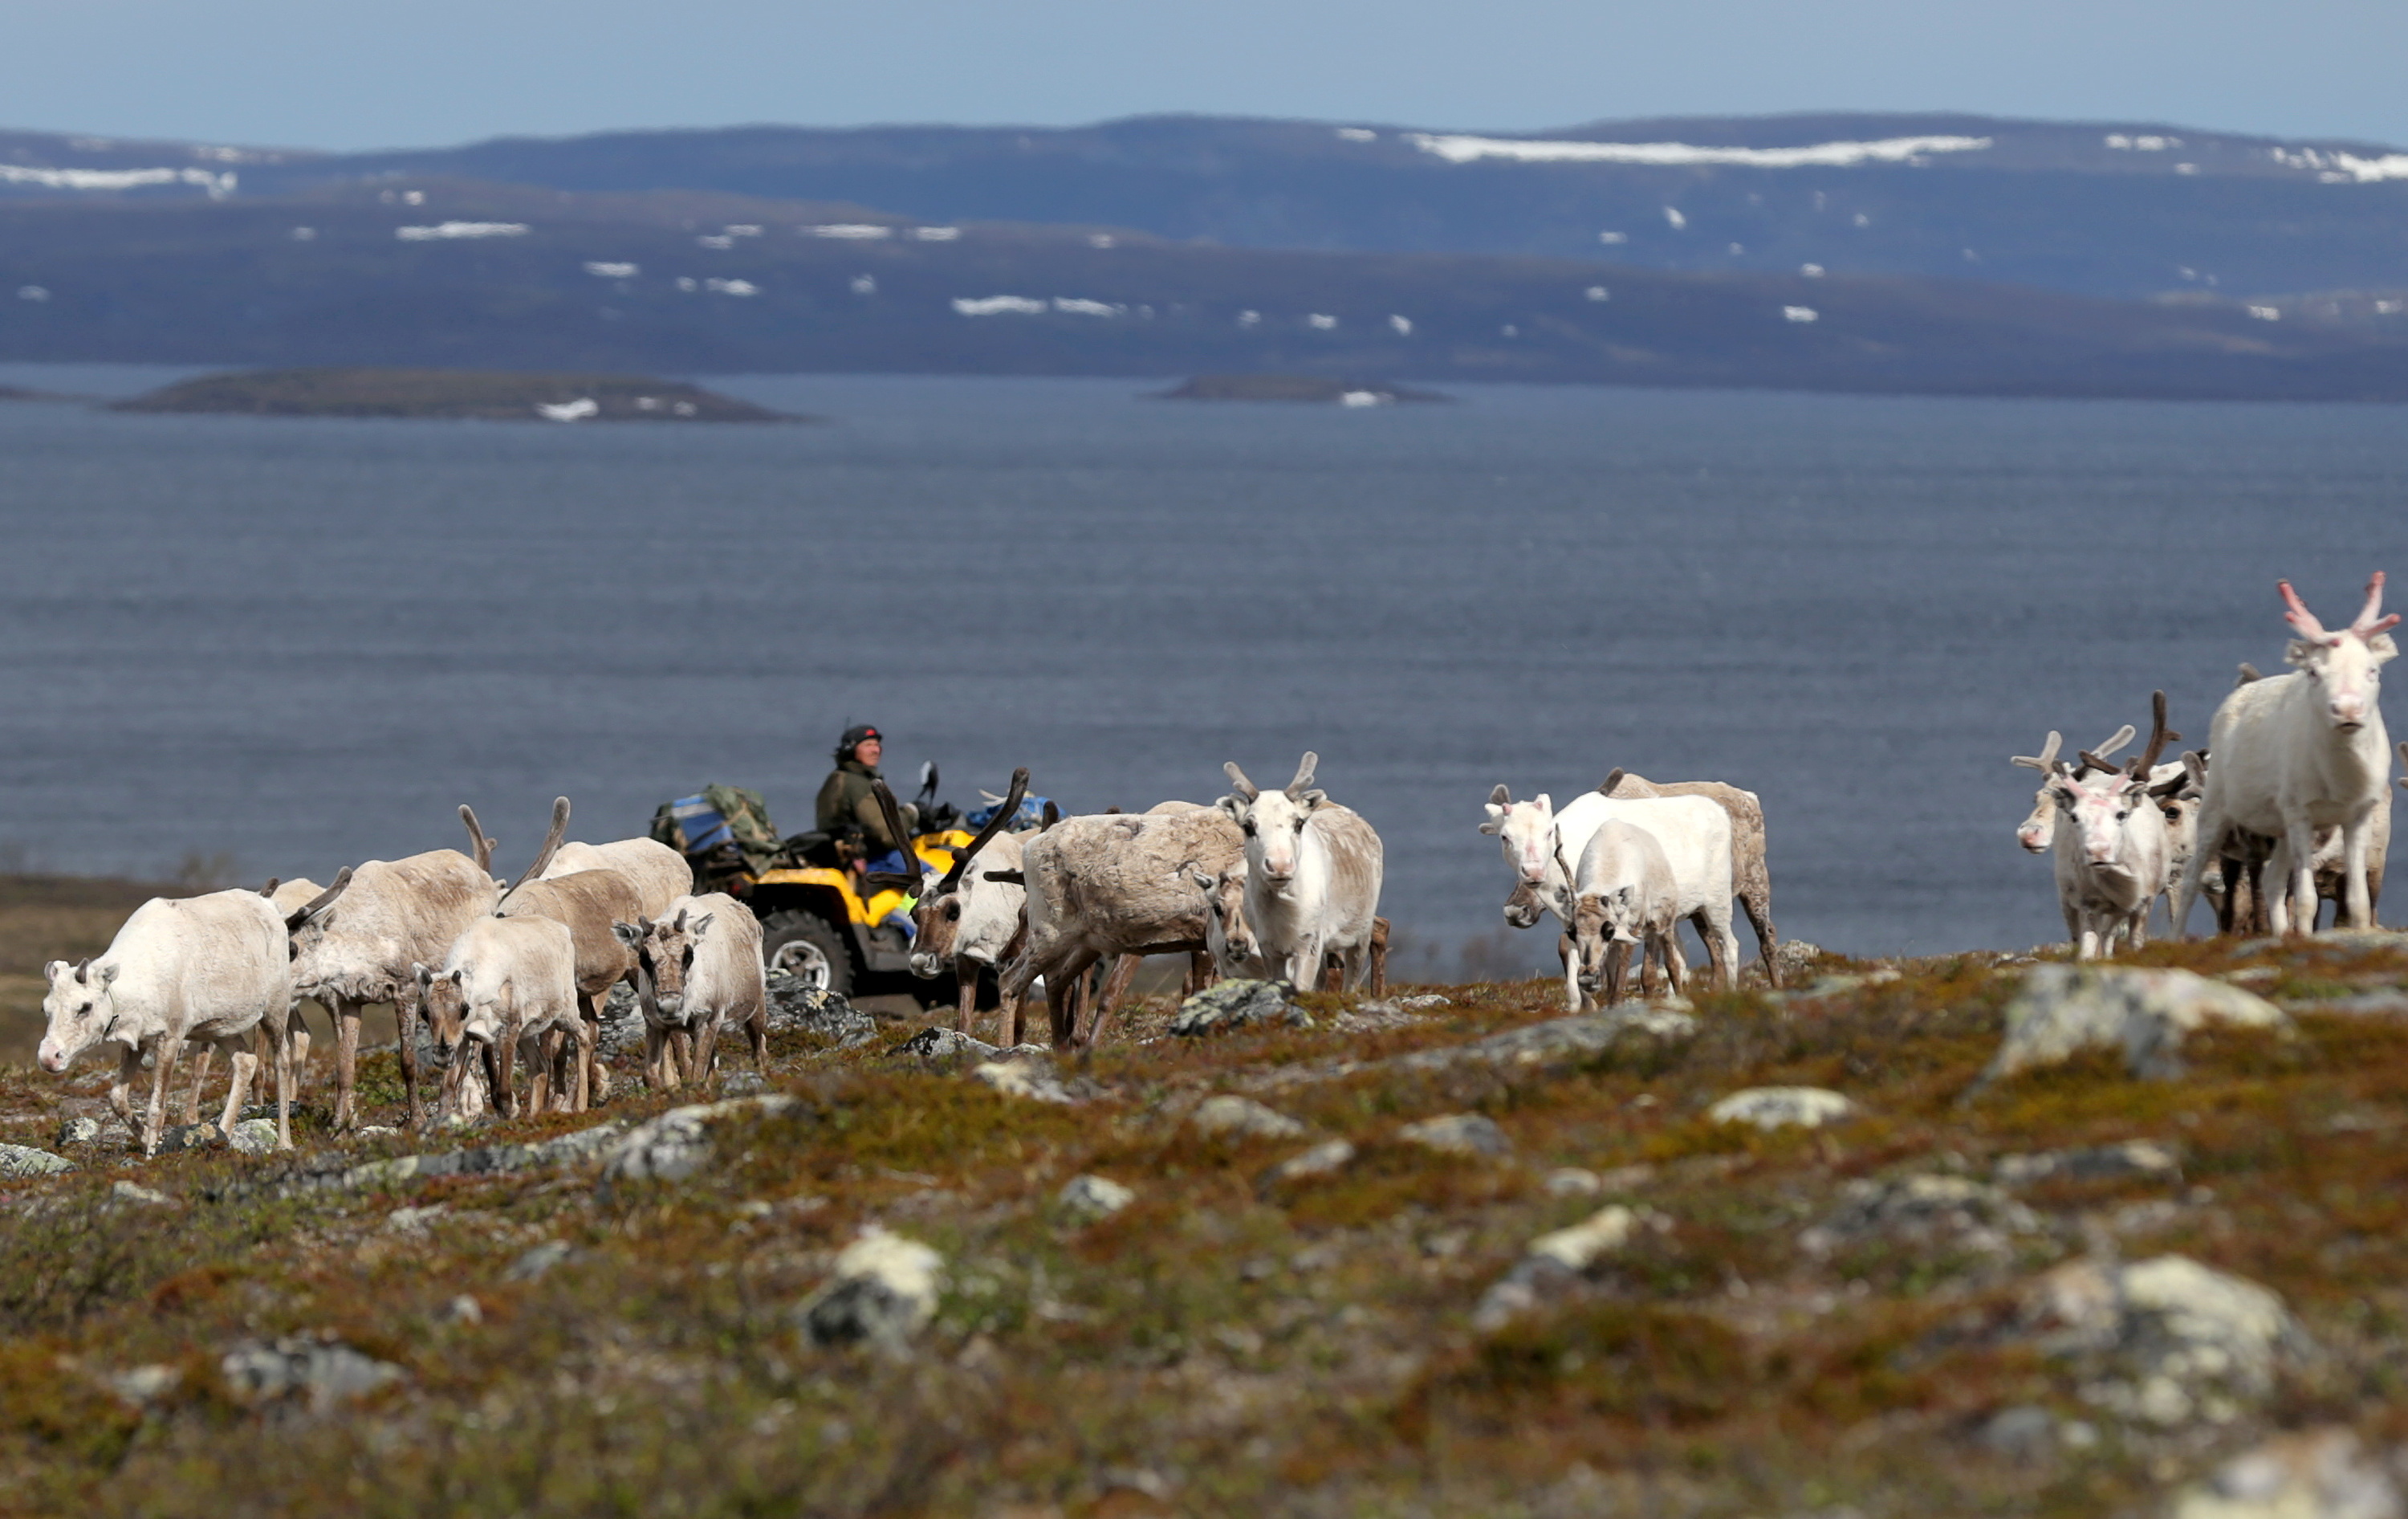 Sami reindeer herder Nils Mathis Sara follows a herd on the Finnmark Plateau, Norway